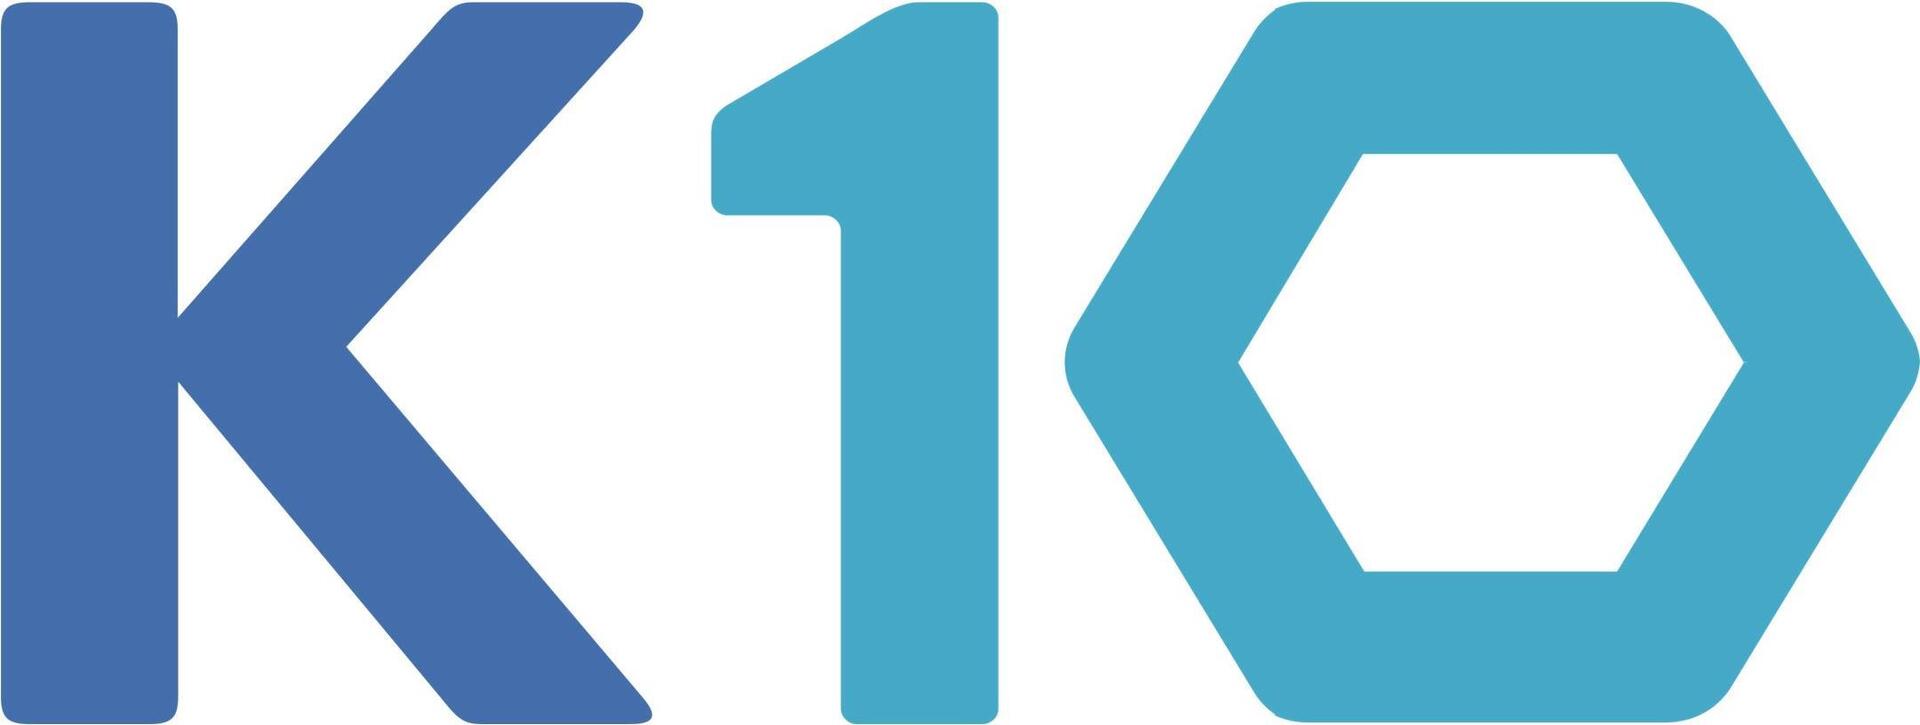 Veeam 2nd Year Payment for renewing Kubernetes Backup and DR with Kasten by Veeam. Kasten K10 Enterprise Platform. 3 Years Subscription Annual Billing & Kasten Basic Support. (V-K10ENT-0N-SA3R2-00)